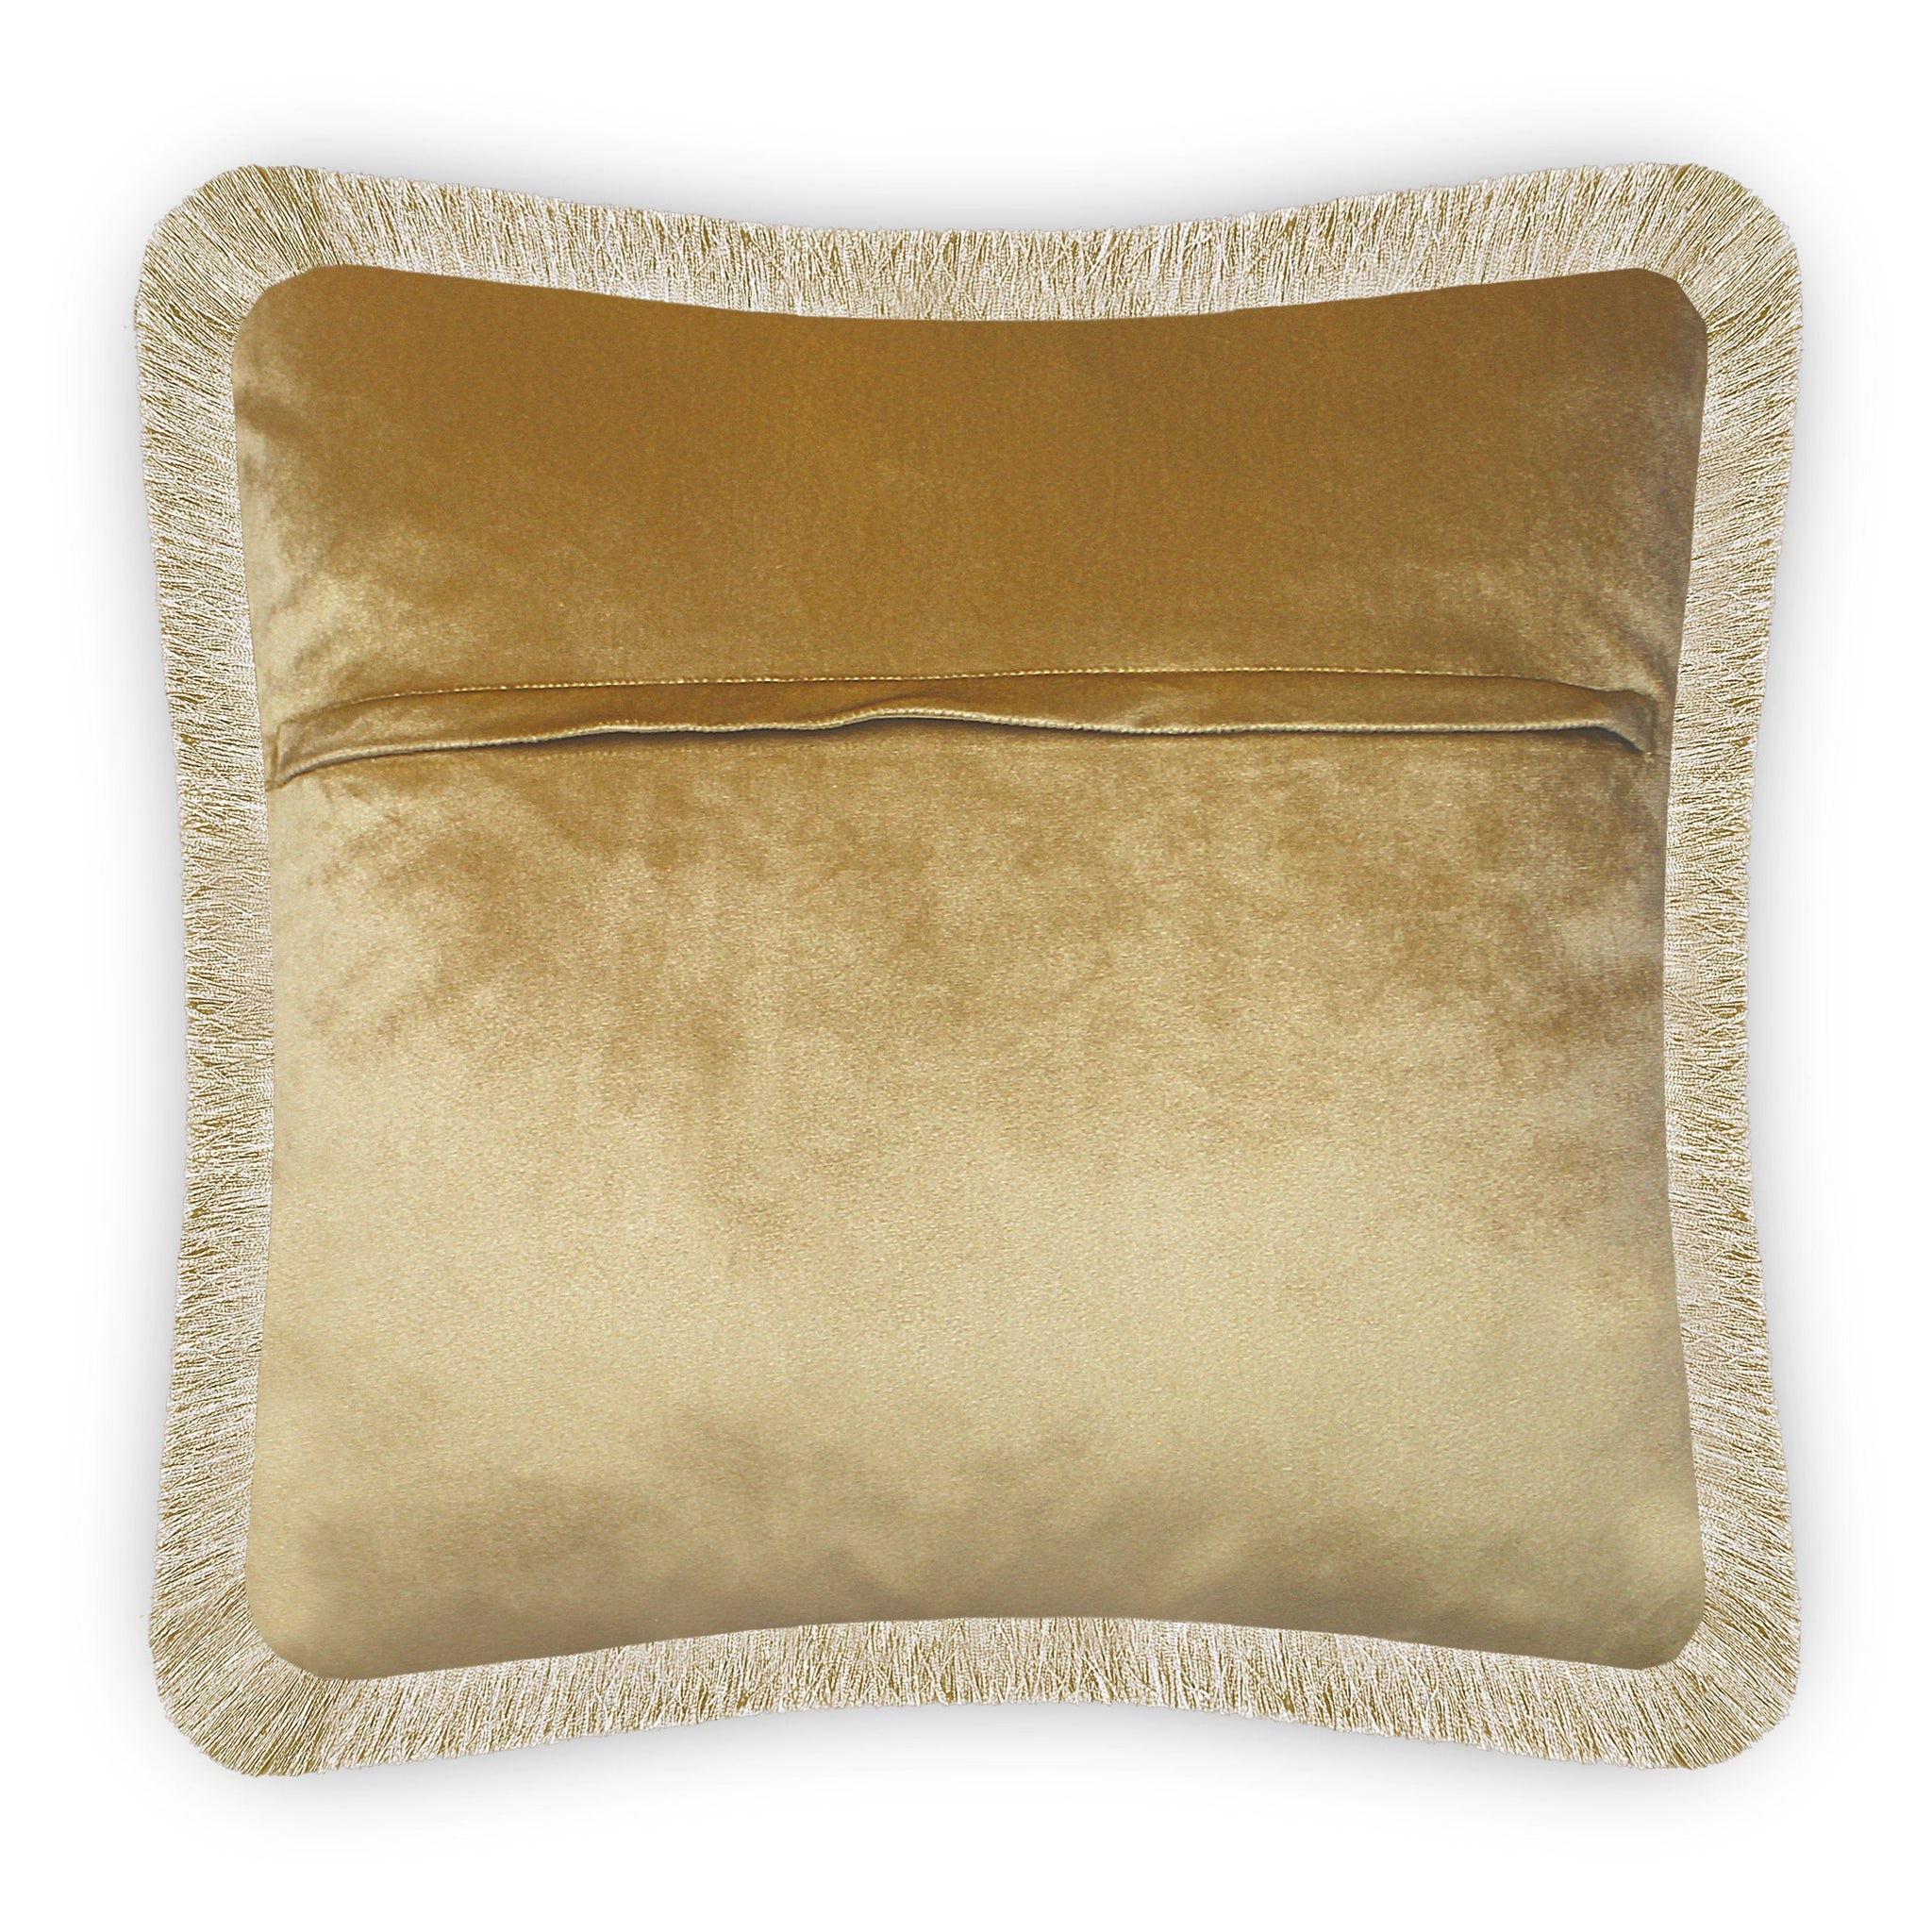 Beige Velvet Cushion Cover Ottoman Floral Decorative Pillowcase Classic Home Decor Throw Pillow for Sofa Chair Living Room 45x45 cm 18x18 In